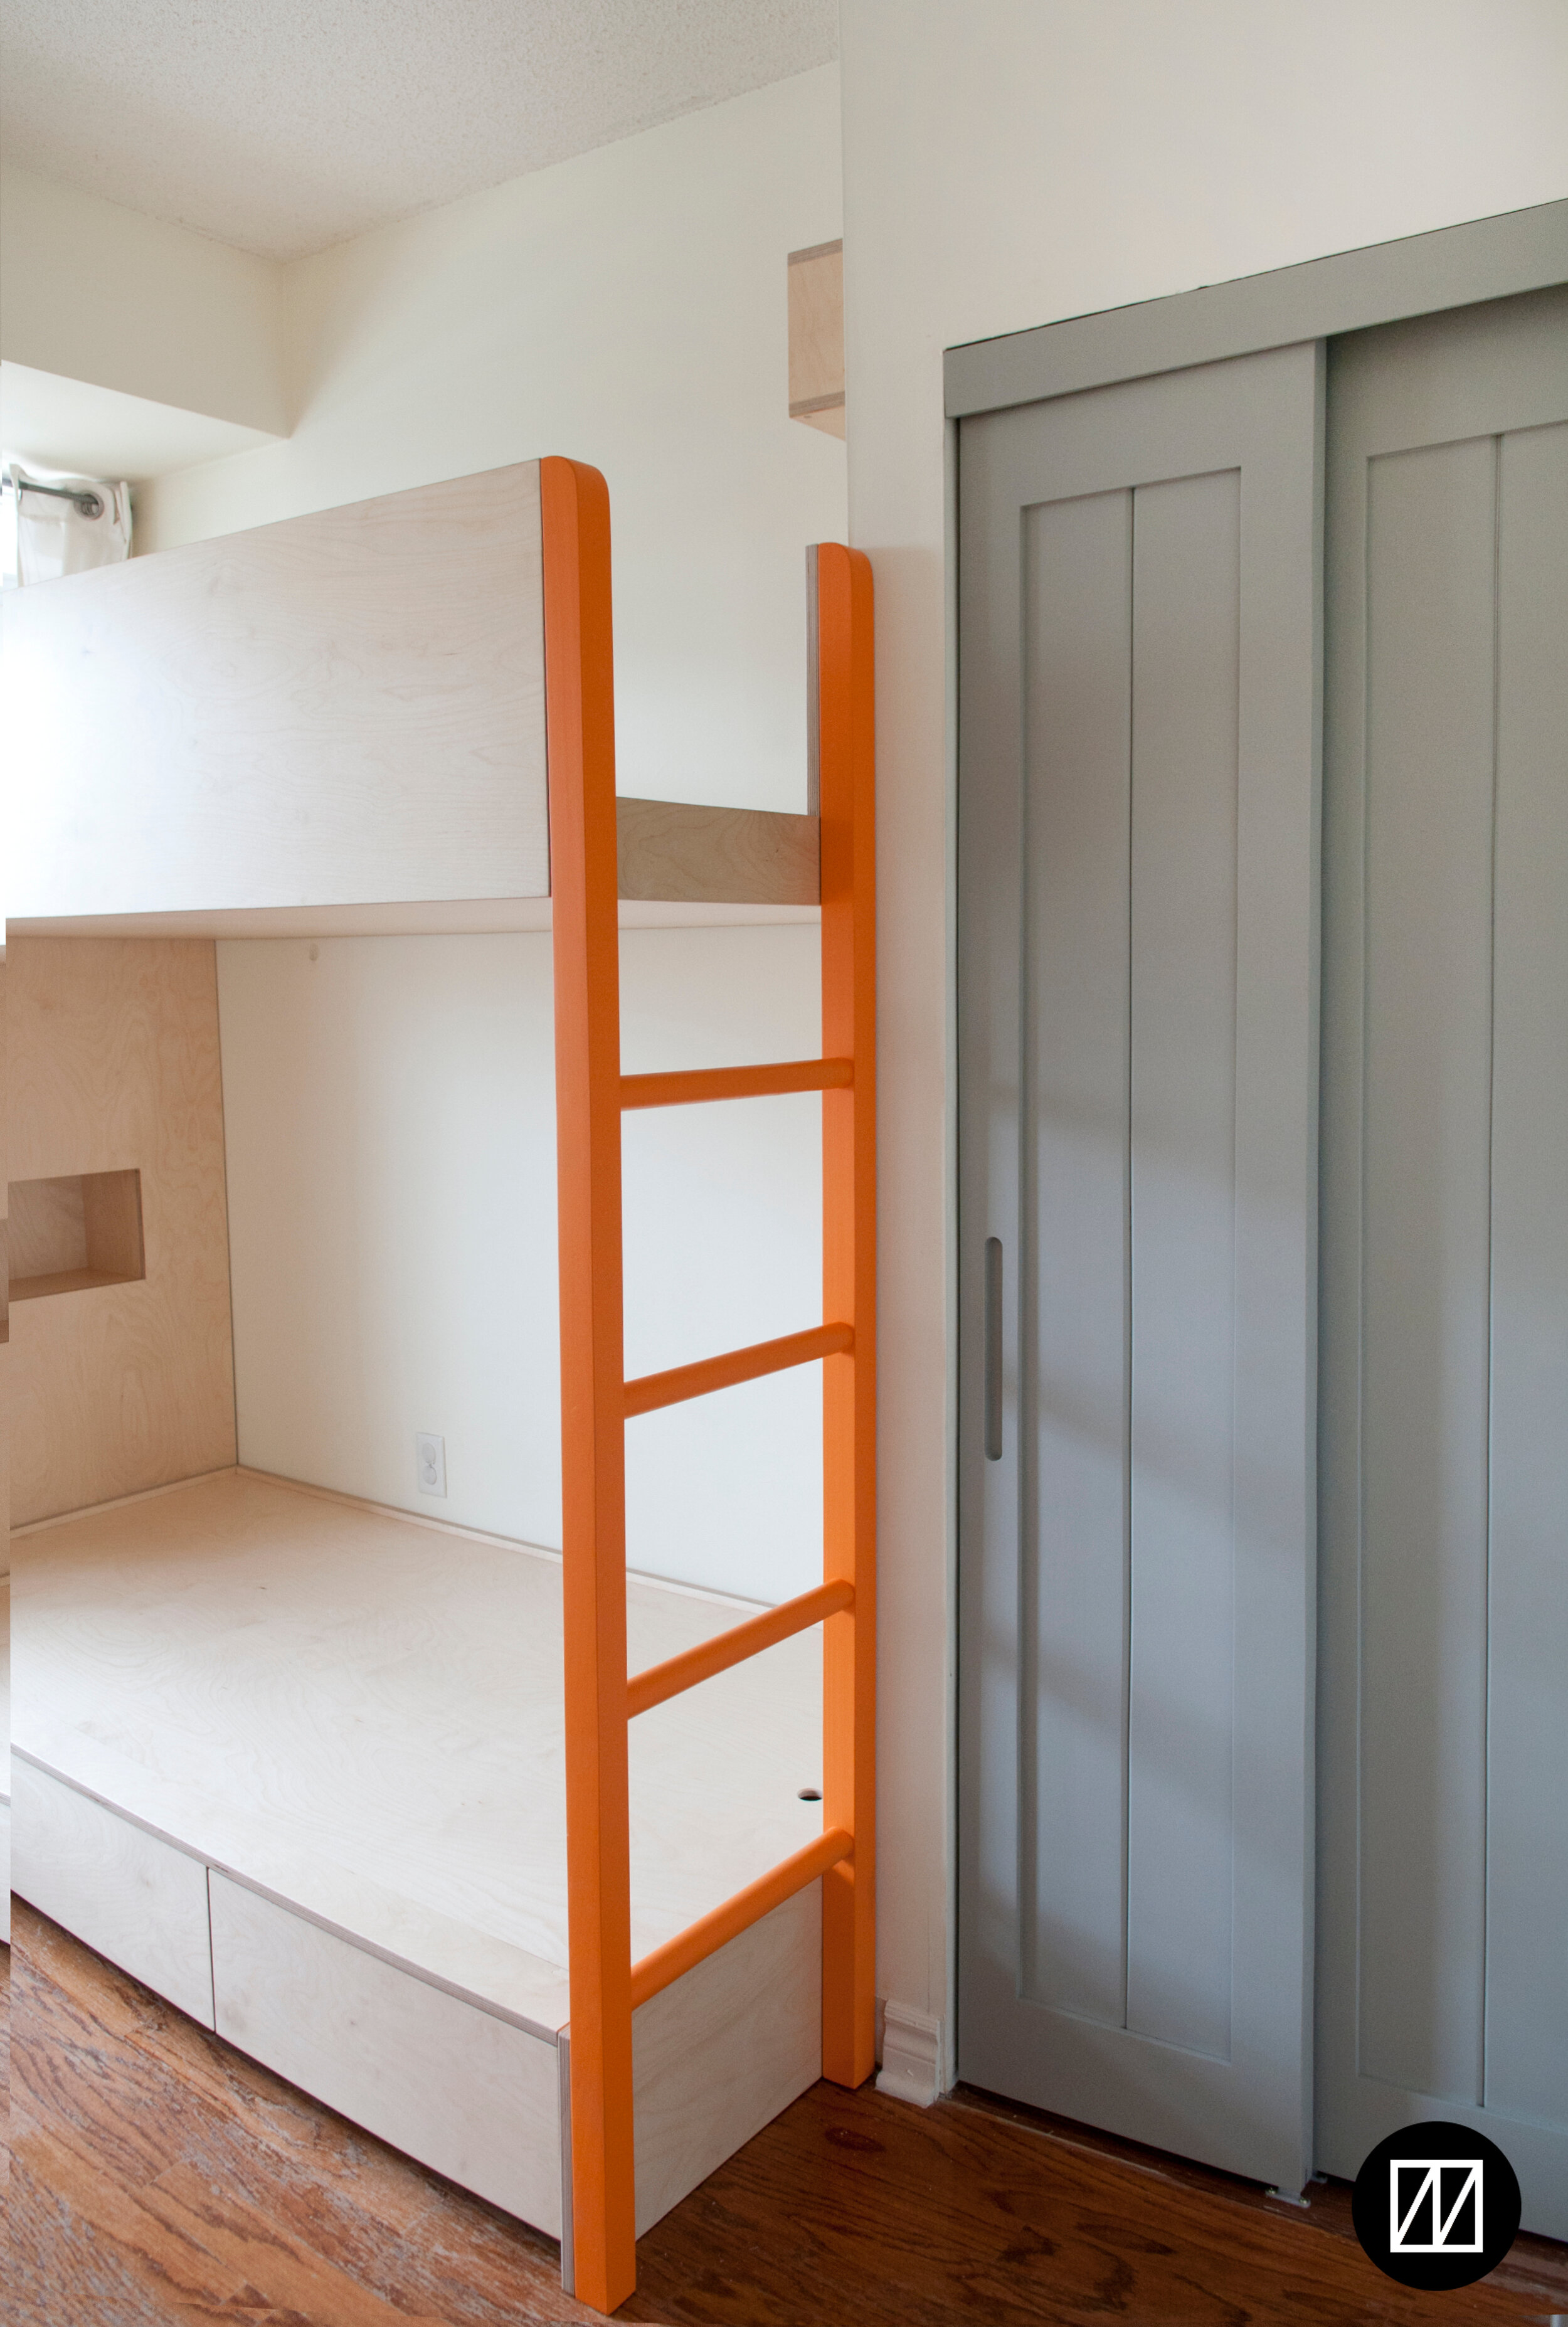 bedroom_orange ladder_arpil2018-with-wm.jpg